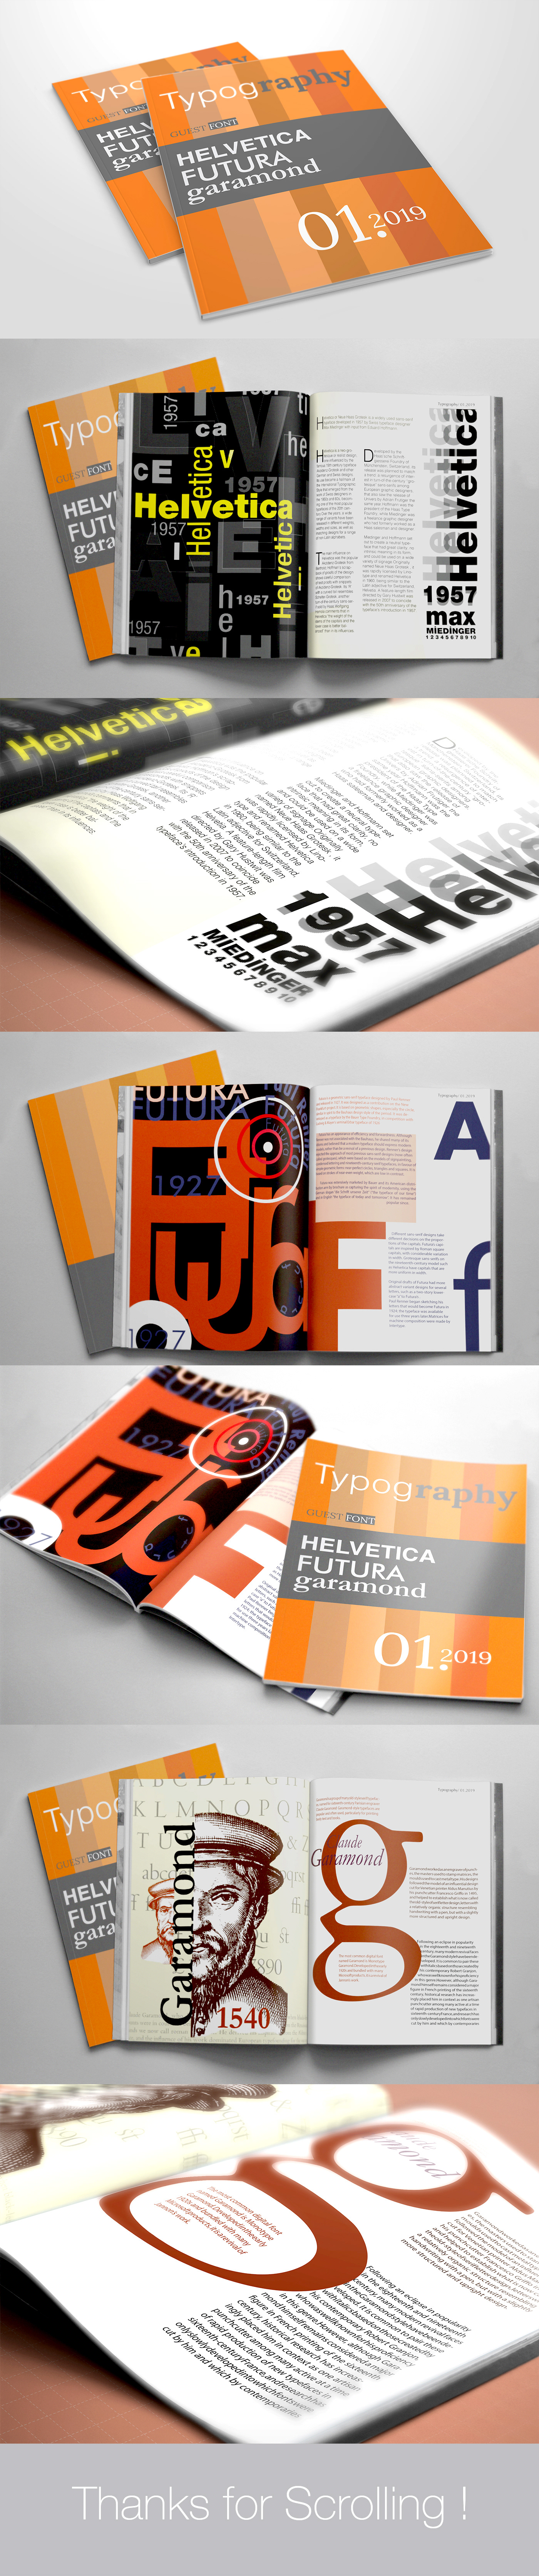 typography   helvetica Futura Garamond magazine journal design colour magazine insp inspiration